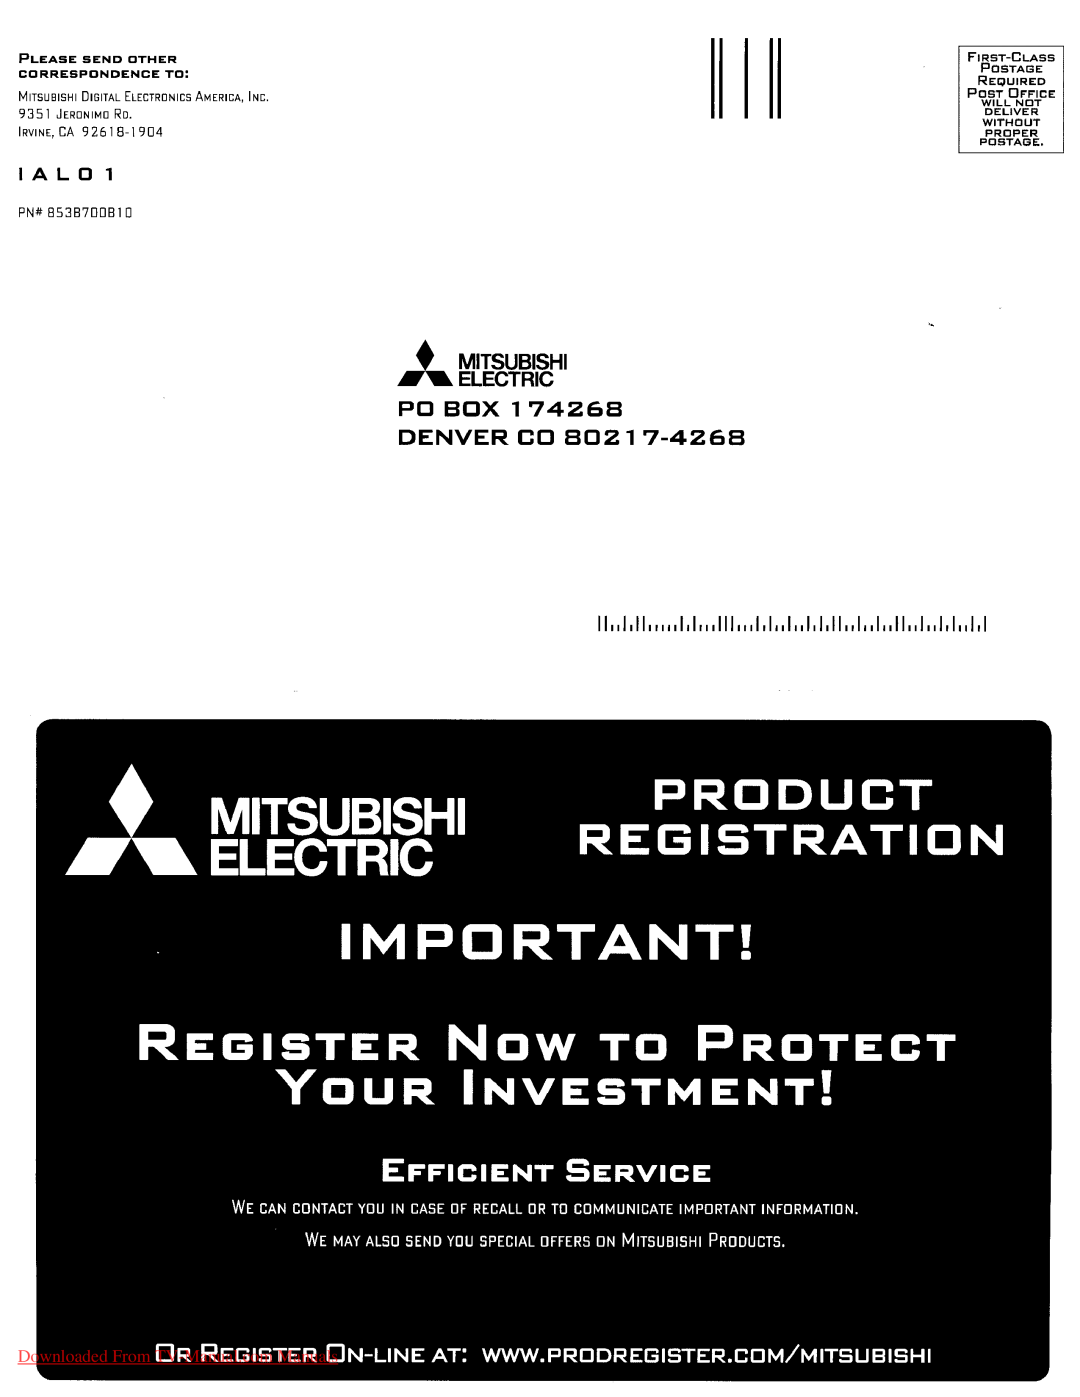 Mitsubishi Electronics 249, 153, 151 manual 11,11,111, 1.111.111. III, 1.,1,,111,11111.,1 111111,111.1, Mitsubishi Electric 